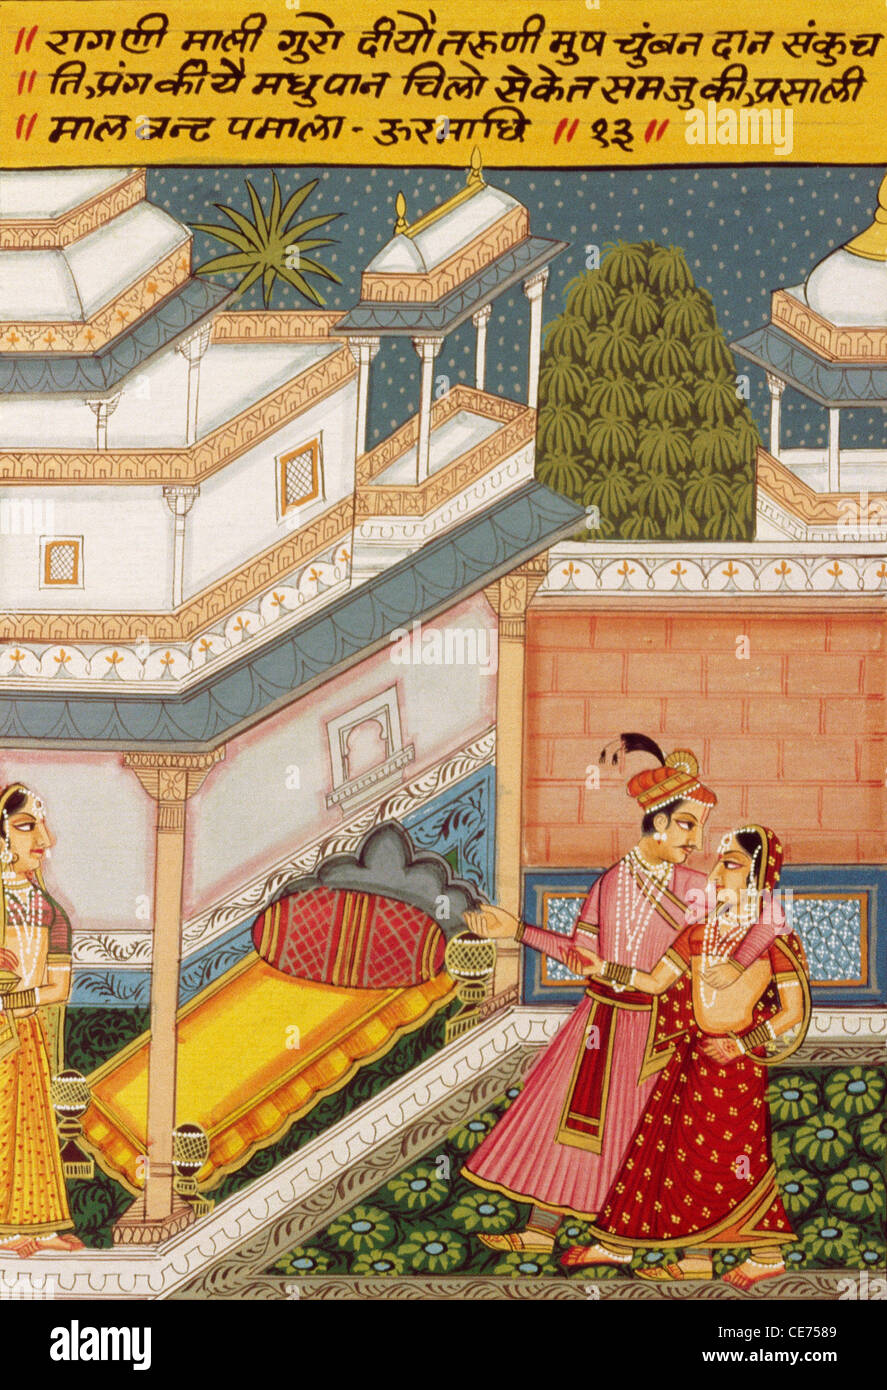 Maharaja et Maharani ; Raja et Rani embrassant dans le jardin ; Ragini Mali Guro 13 ; peinture miniature ; natchnara ; rajasthan ; inde ; asie Banque D'Images